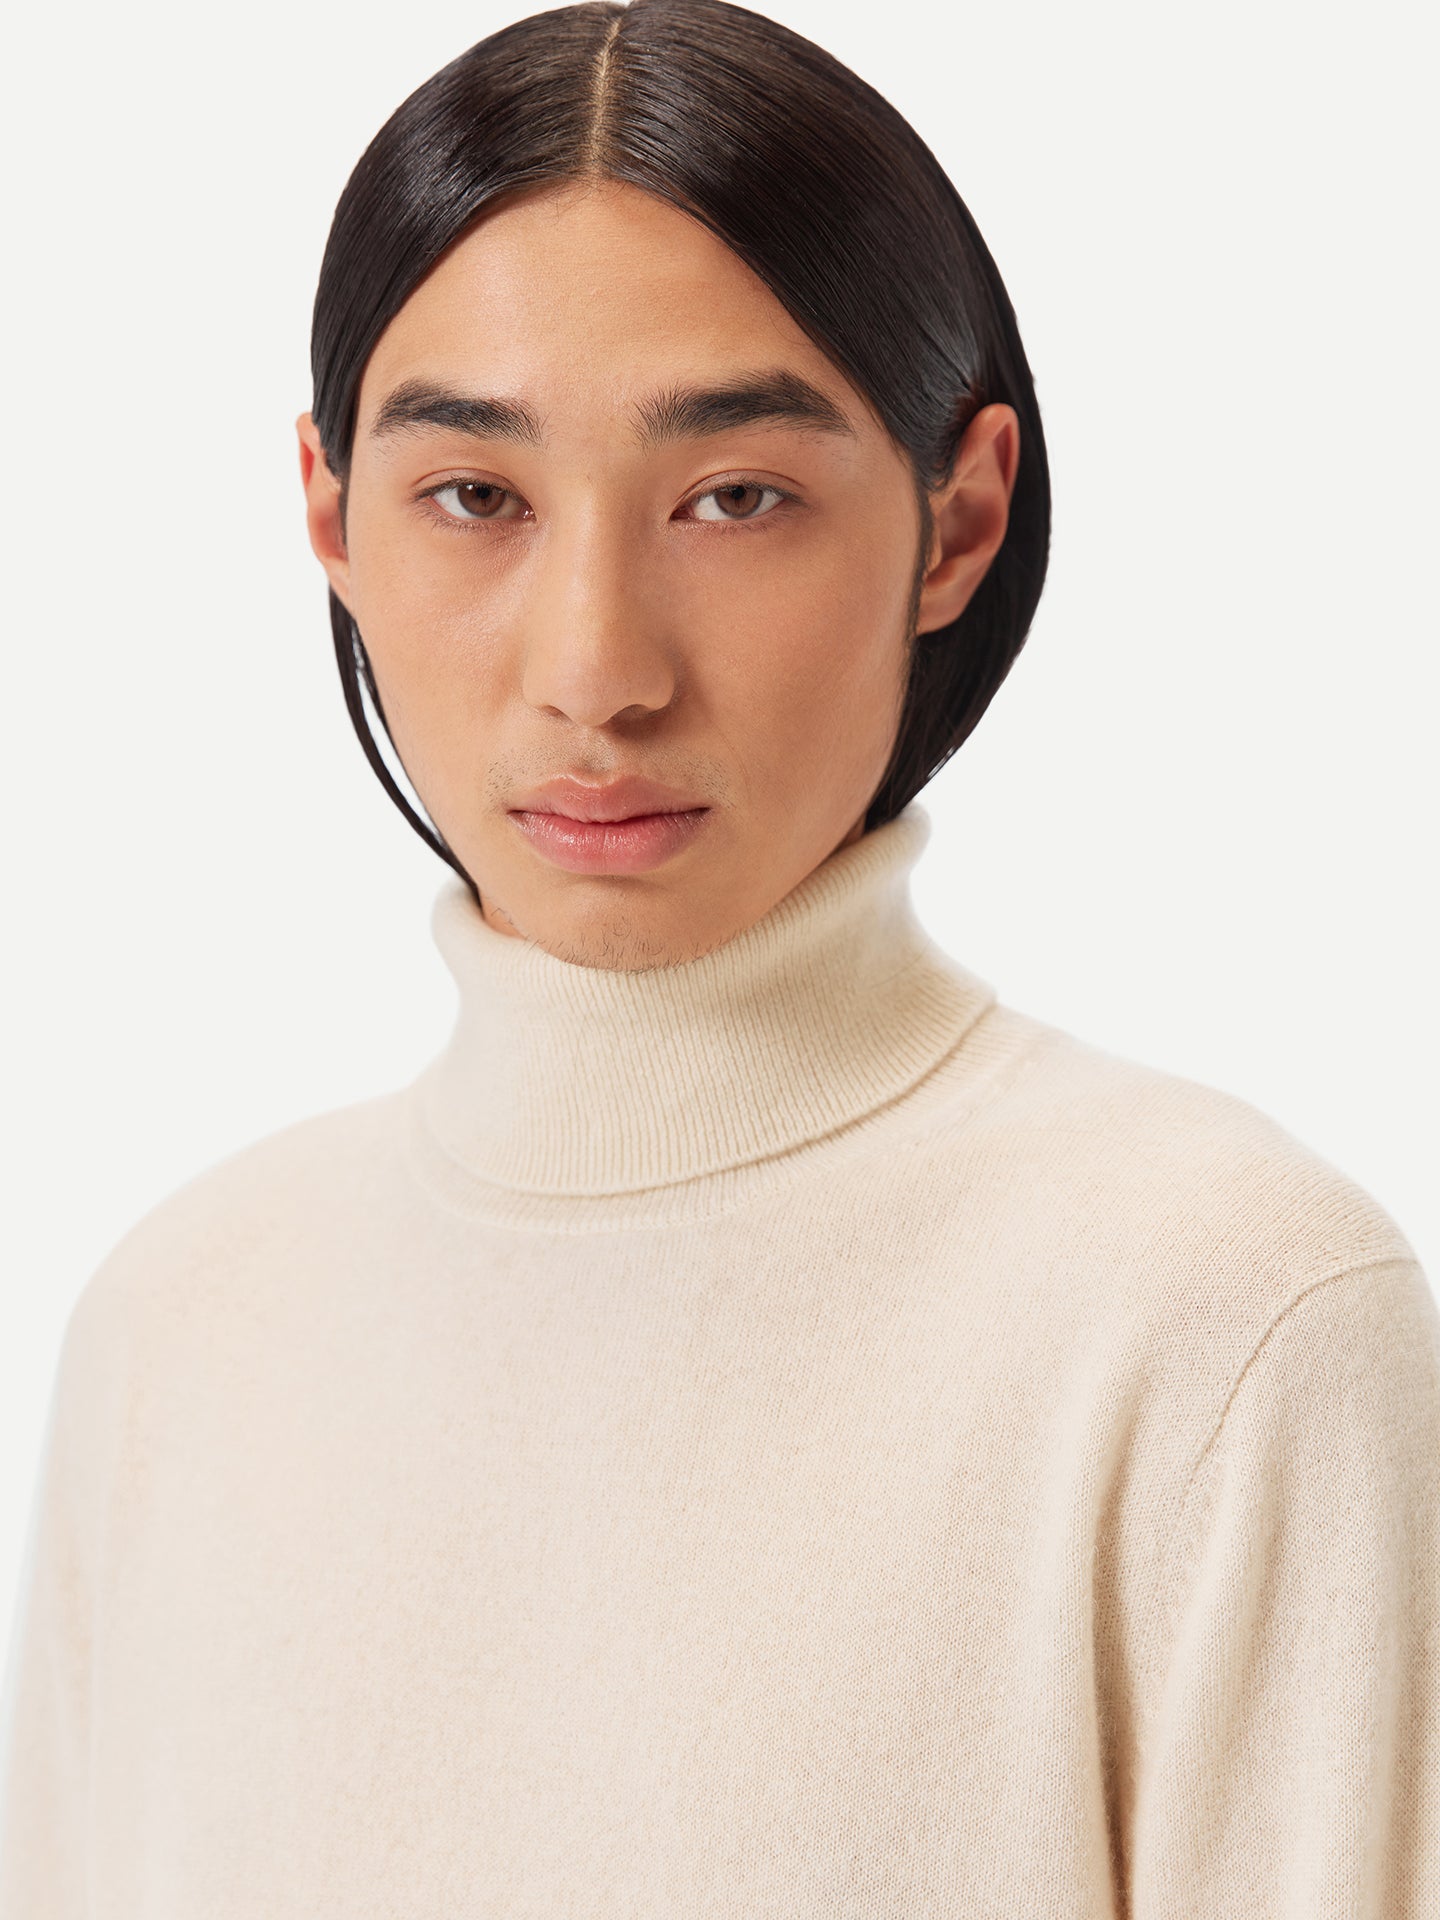 Men's Cashmere Basic Turtle Neck Sweater Off White - Gobi Cashmere